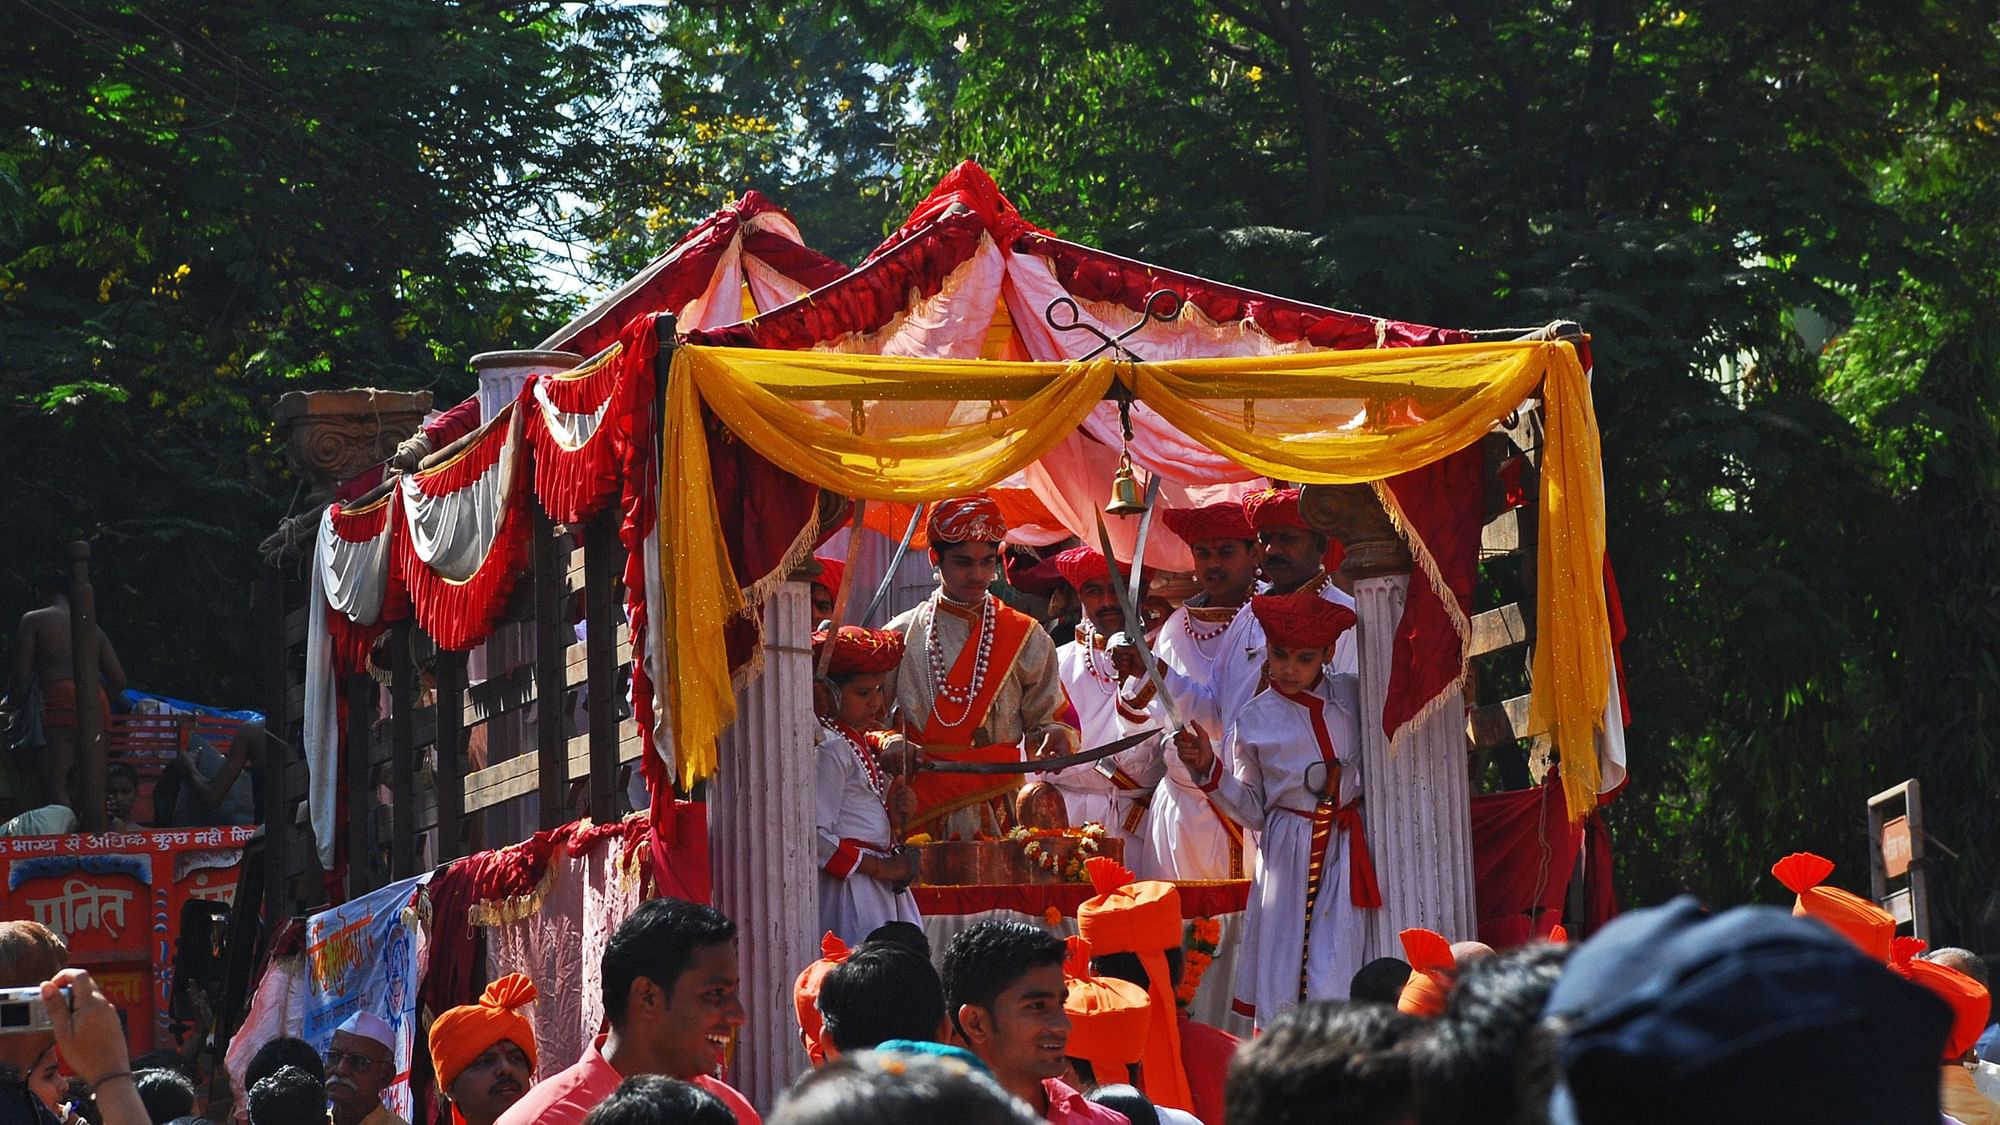 A new year procession on Gudi Padwa festival in Dombivli, Maharashtra.